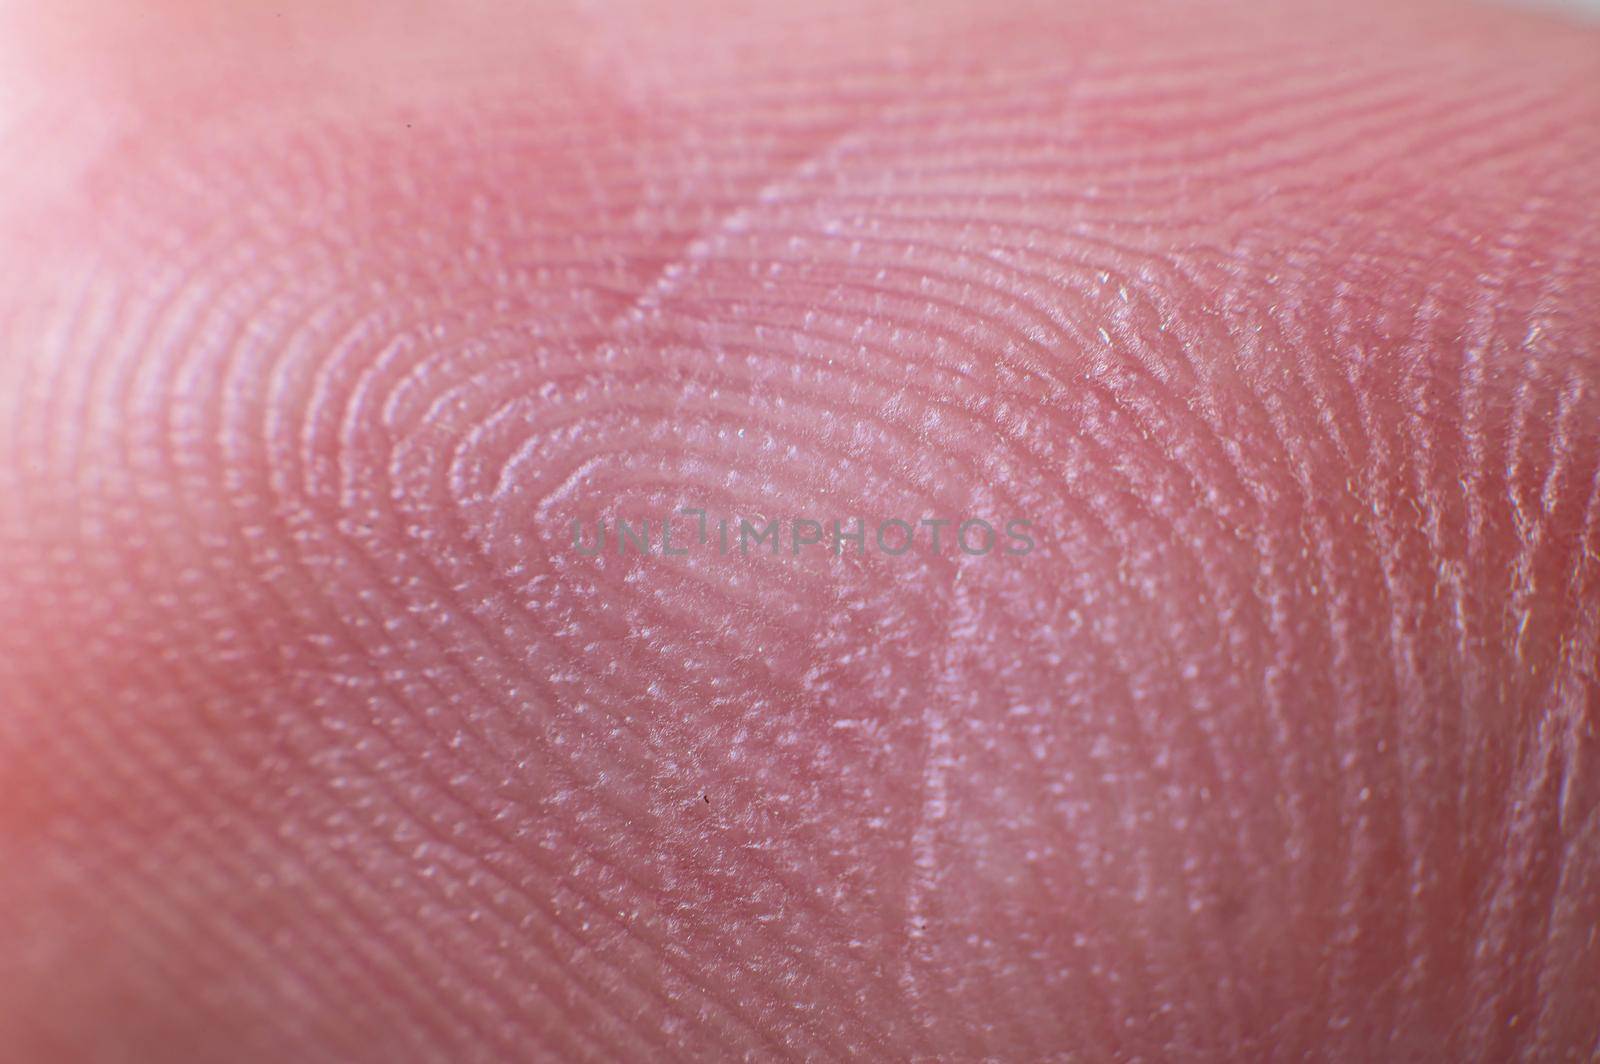 Close-up surface Fingerprint - extreme macro photography. Biometrics and fingerprinting by yanik88